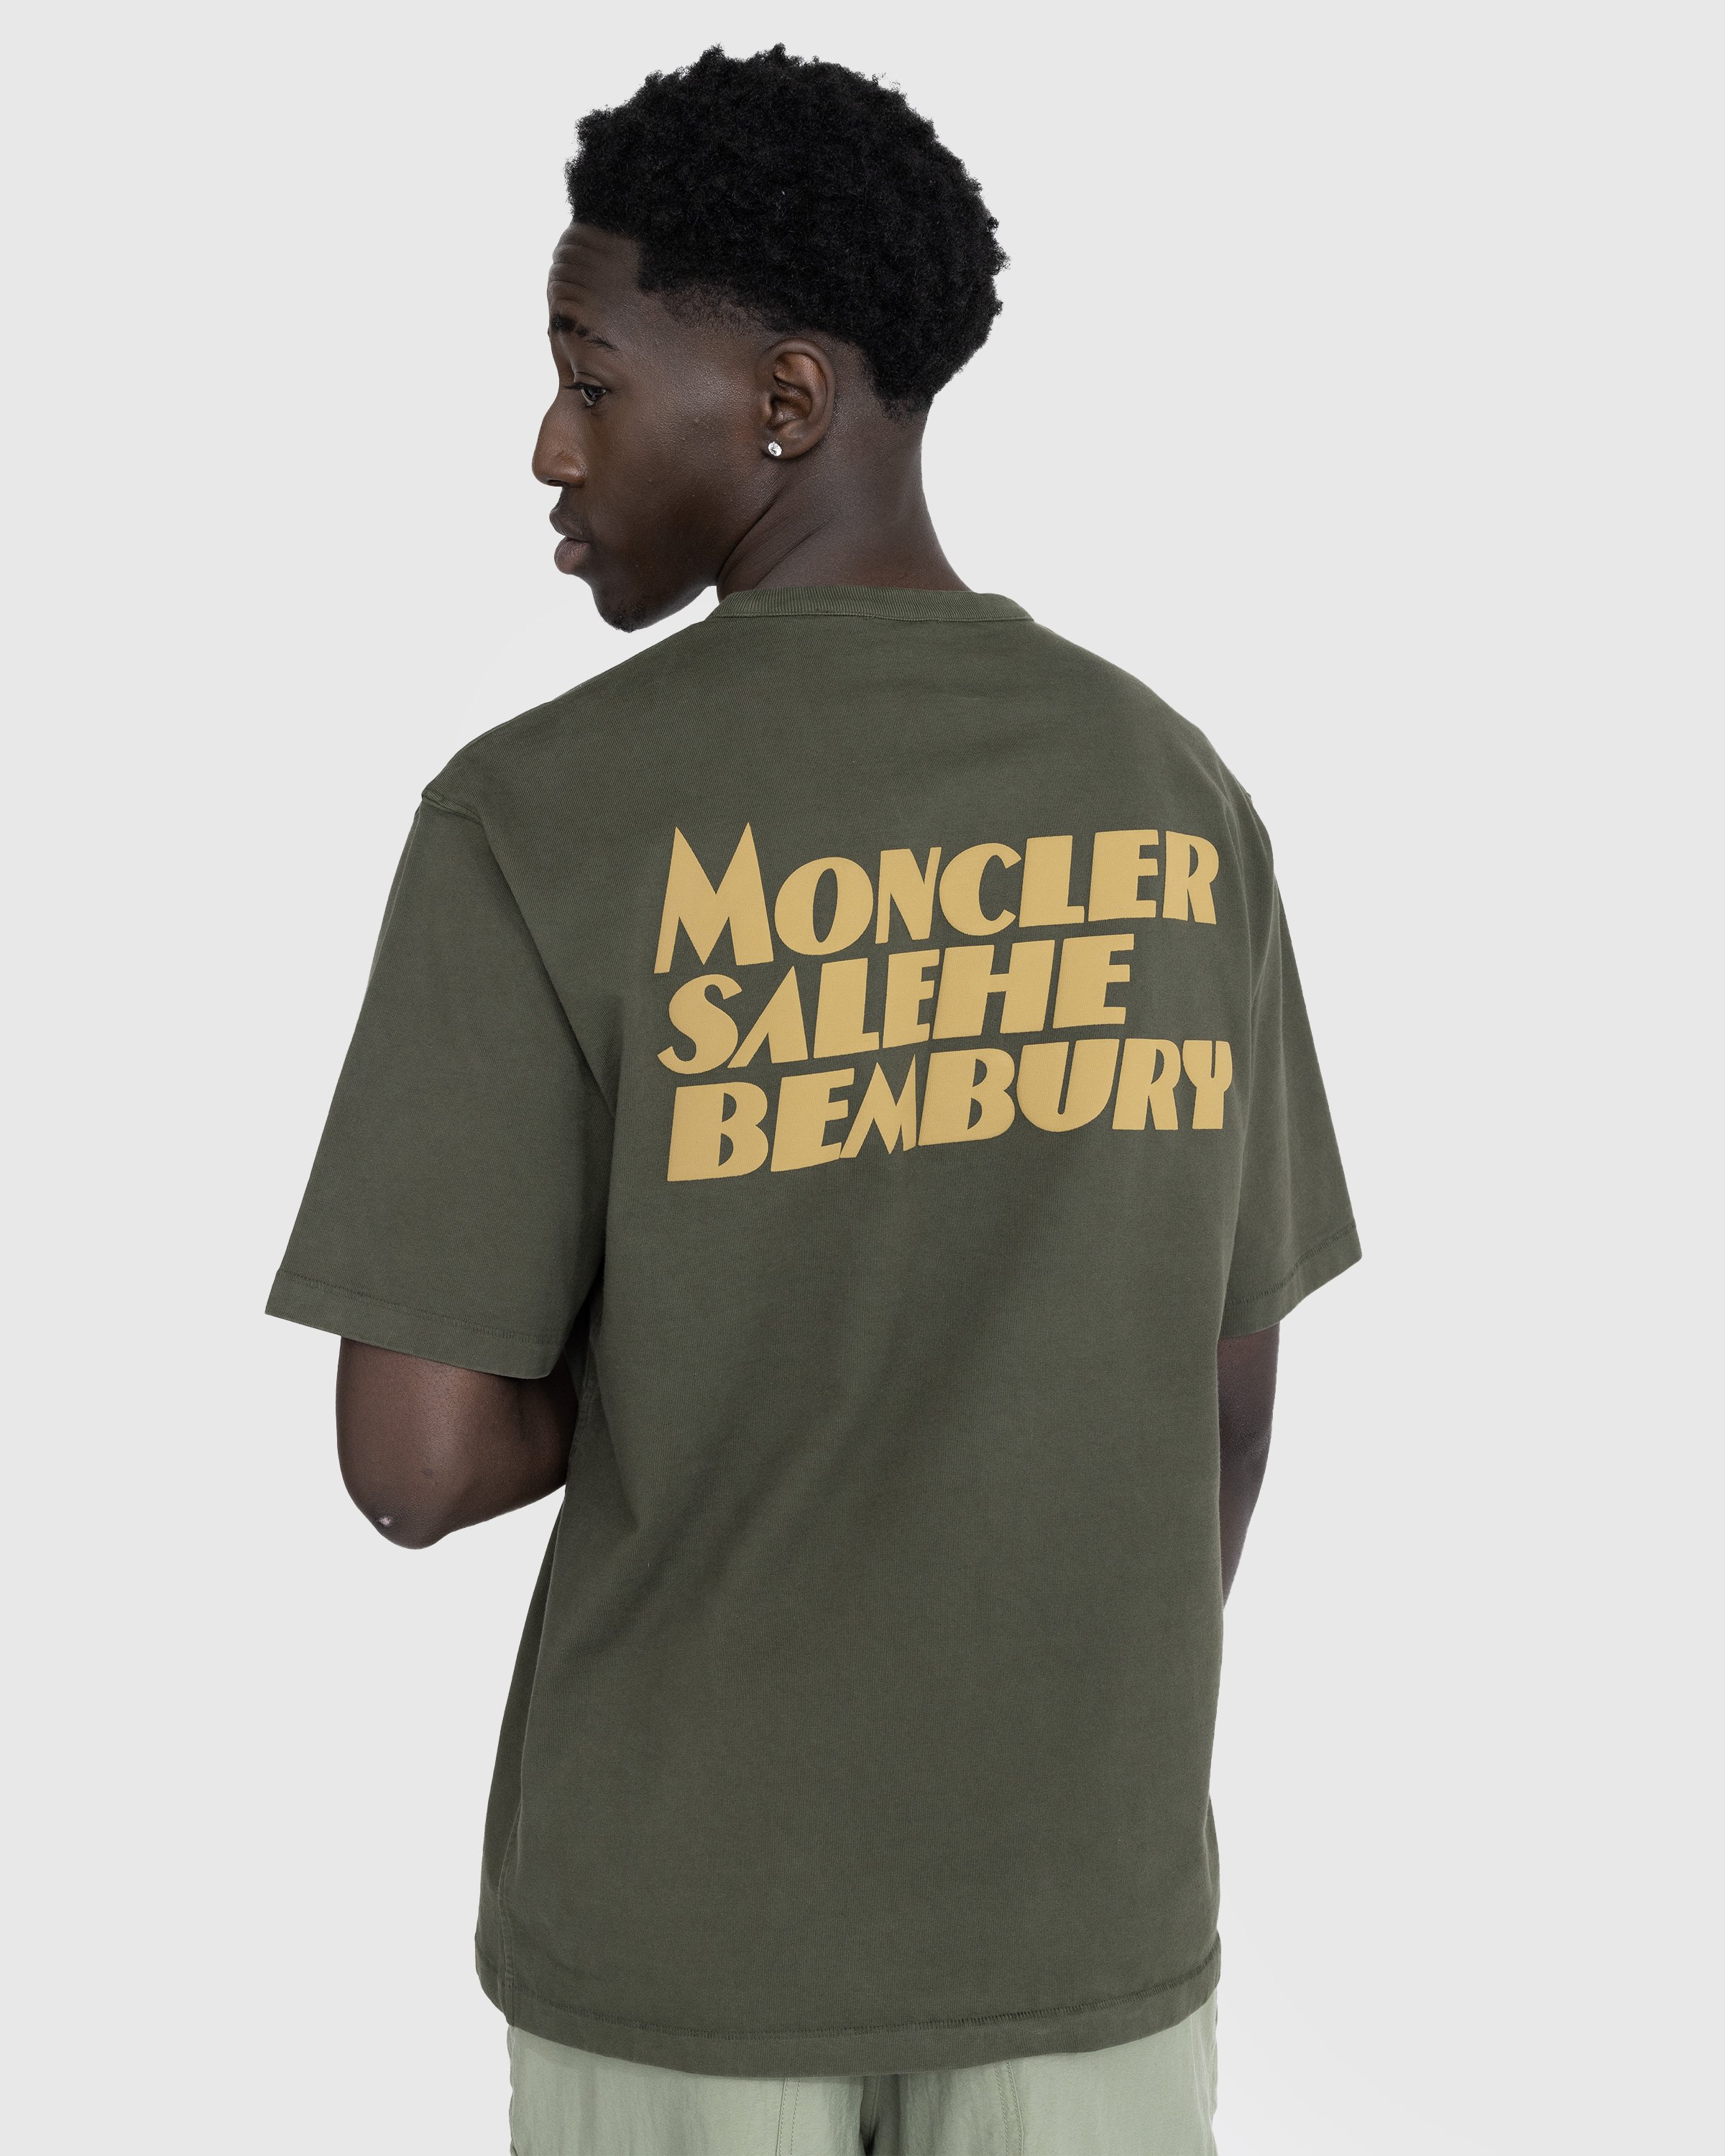 Moncler x Salehe Bembury - Logo T-Shirt Green - Clothing - Green - Image 3